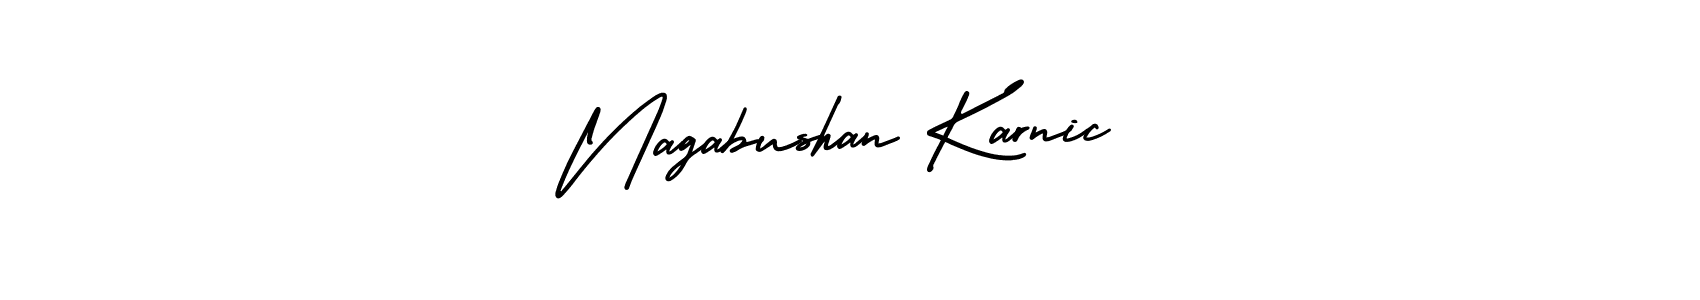 How to Draw Nagabushan Karnic signature style? AmerikaSignatureDemo-Regular is a latest design signature styles for name Nagabushan Karnic. Nagabushan Karnic signature style 3 images and pictures png